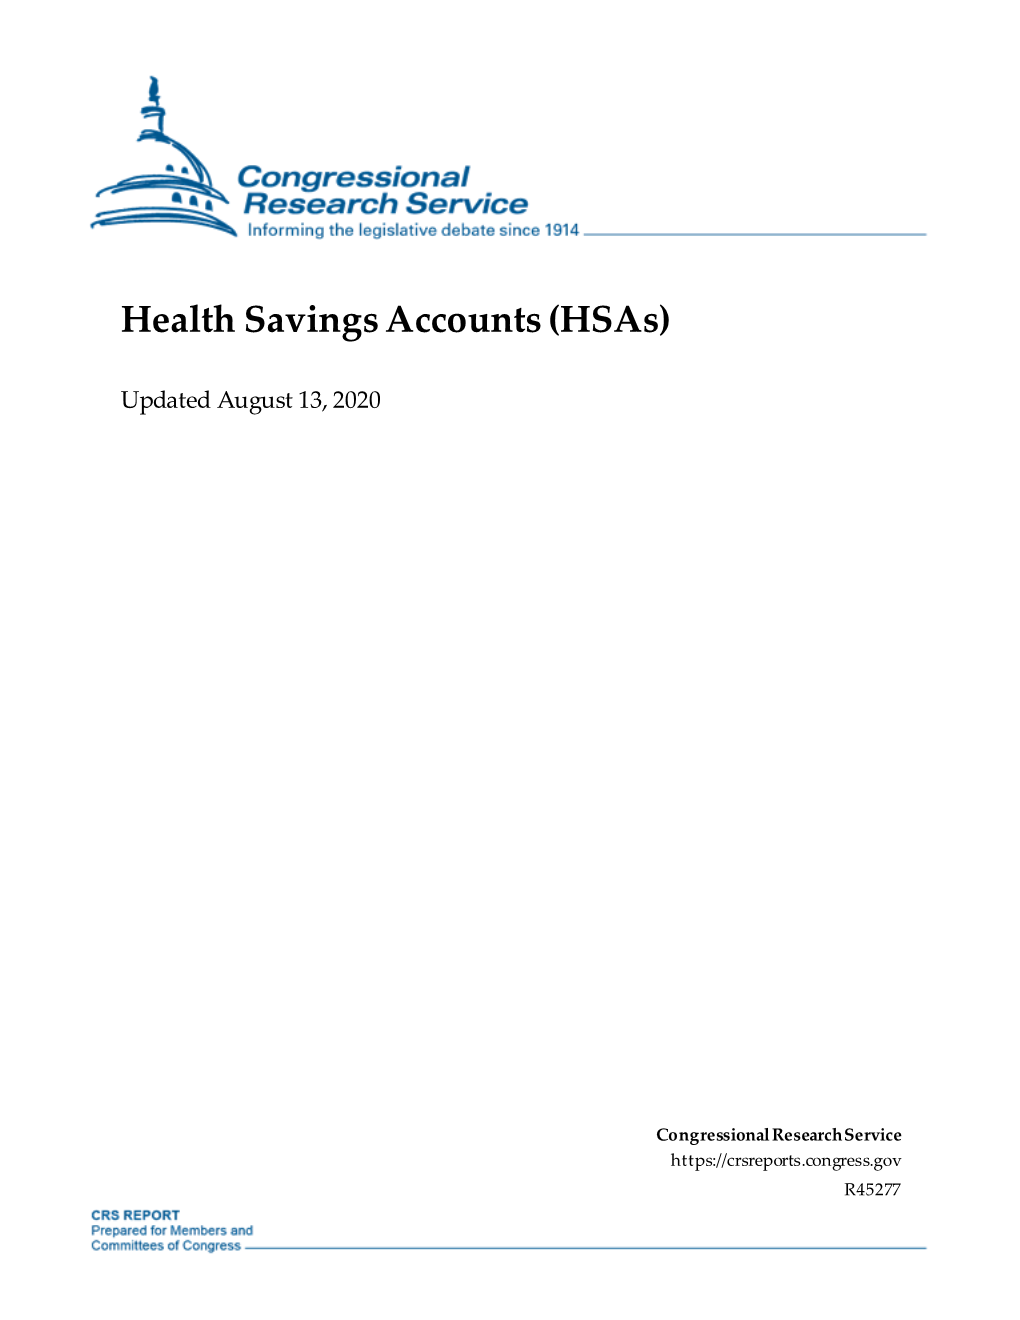 Health Savings Accounts (Hsas)